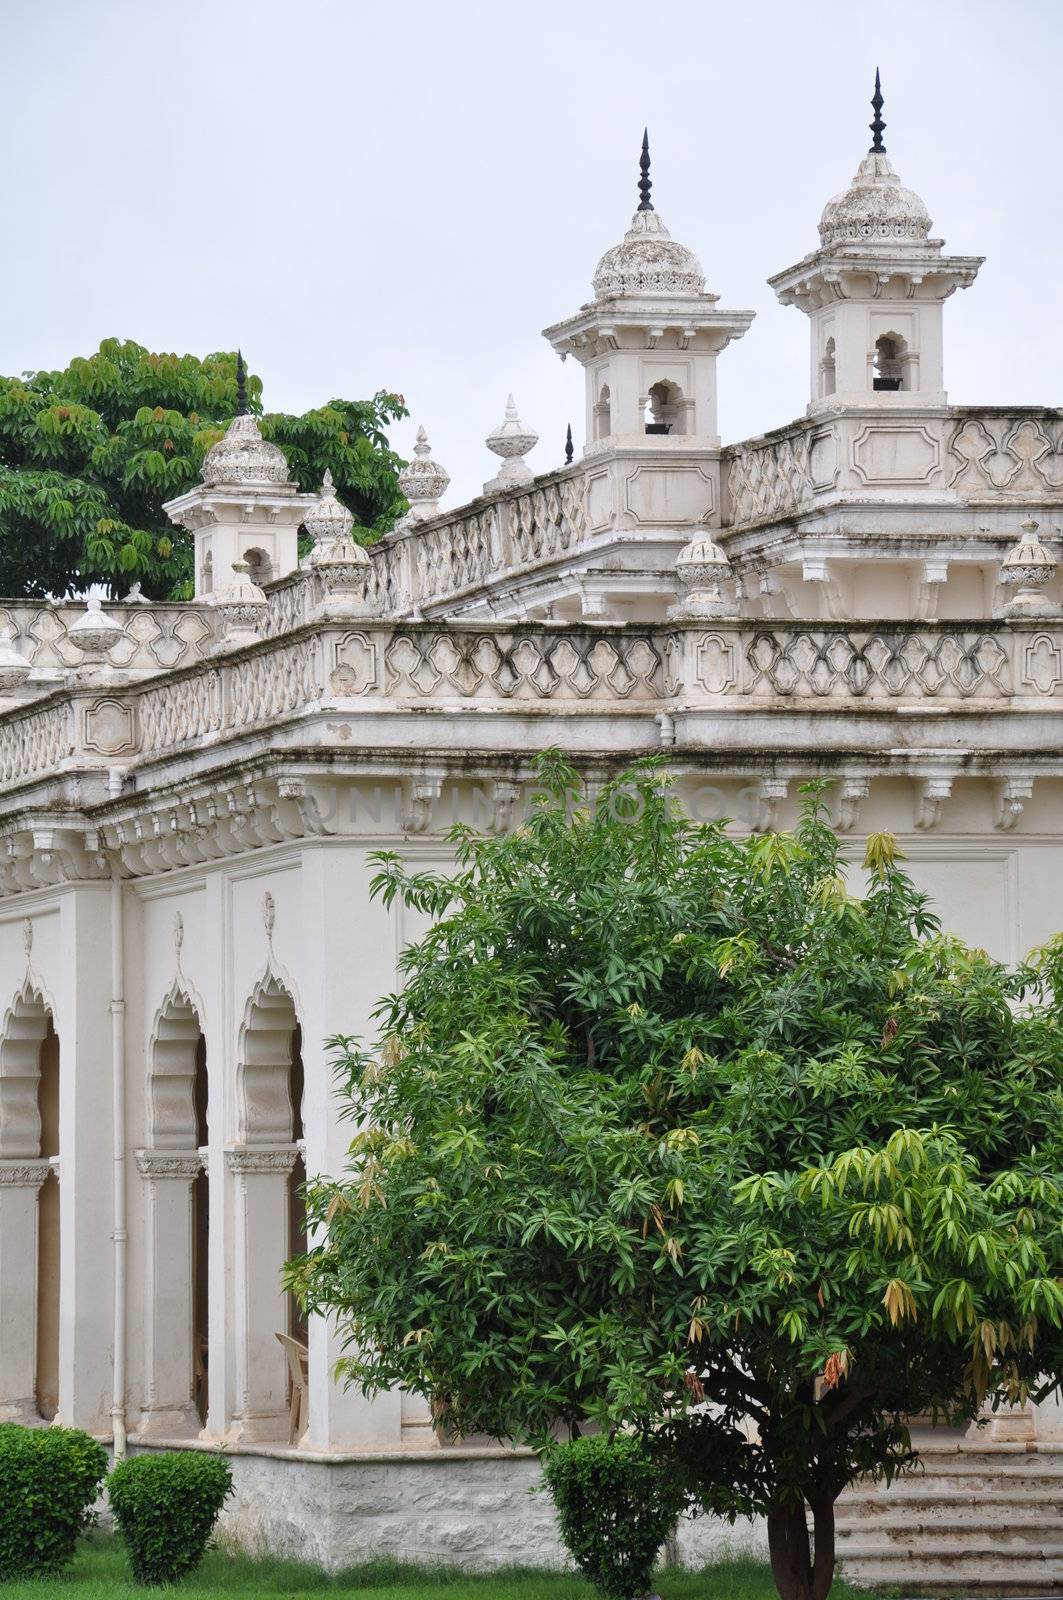 Chowmahalla Palace in Hyderabad, India by sainaniritu